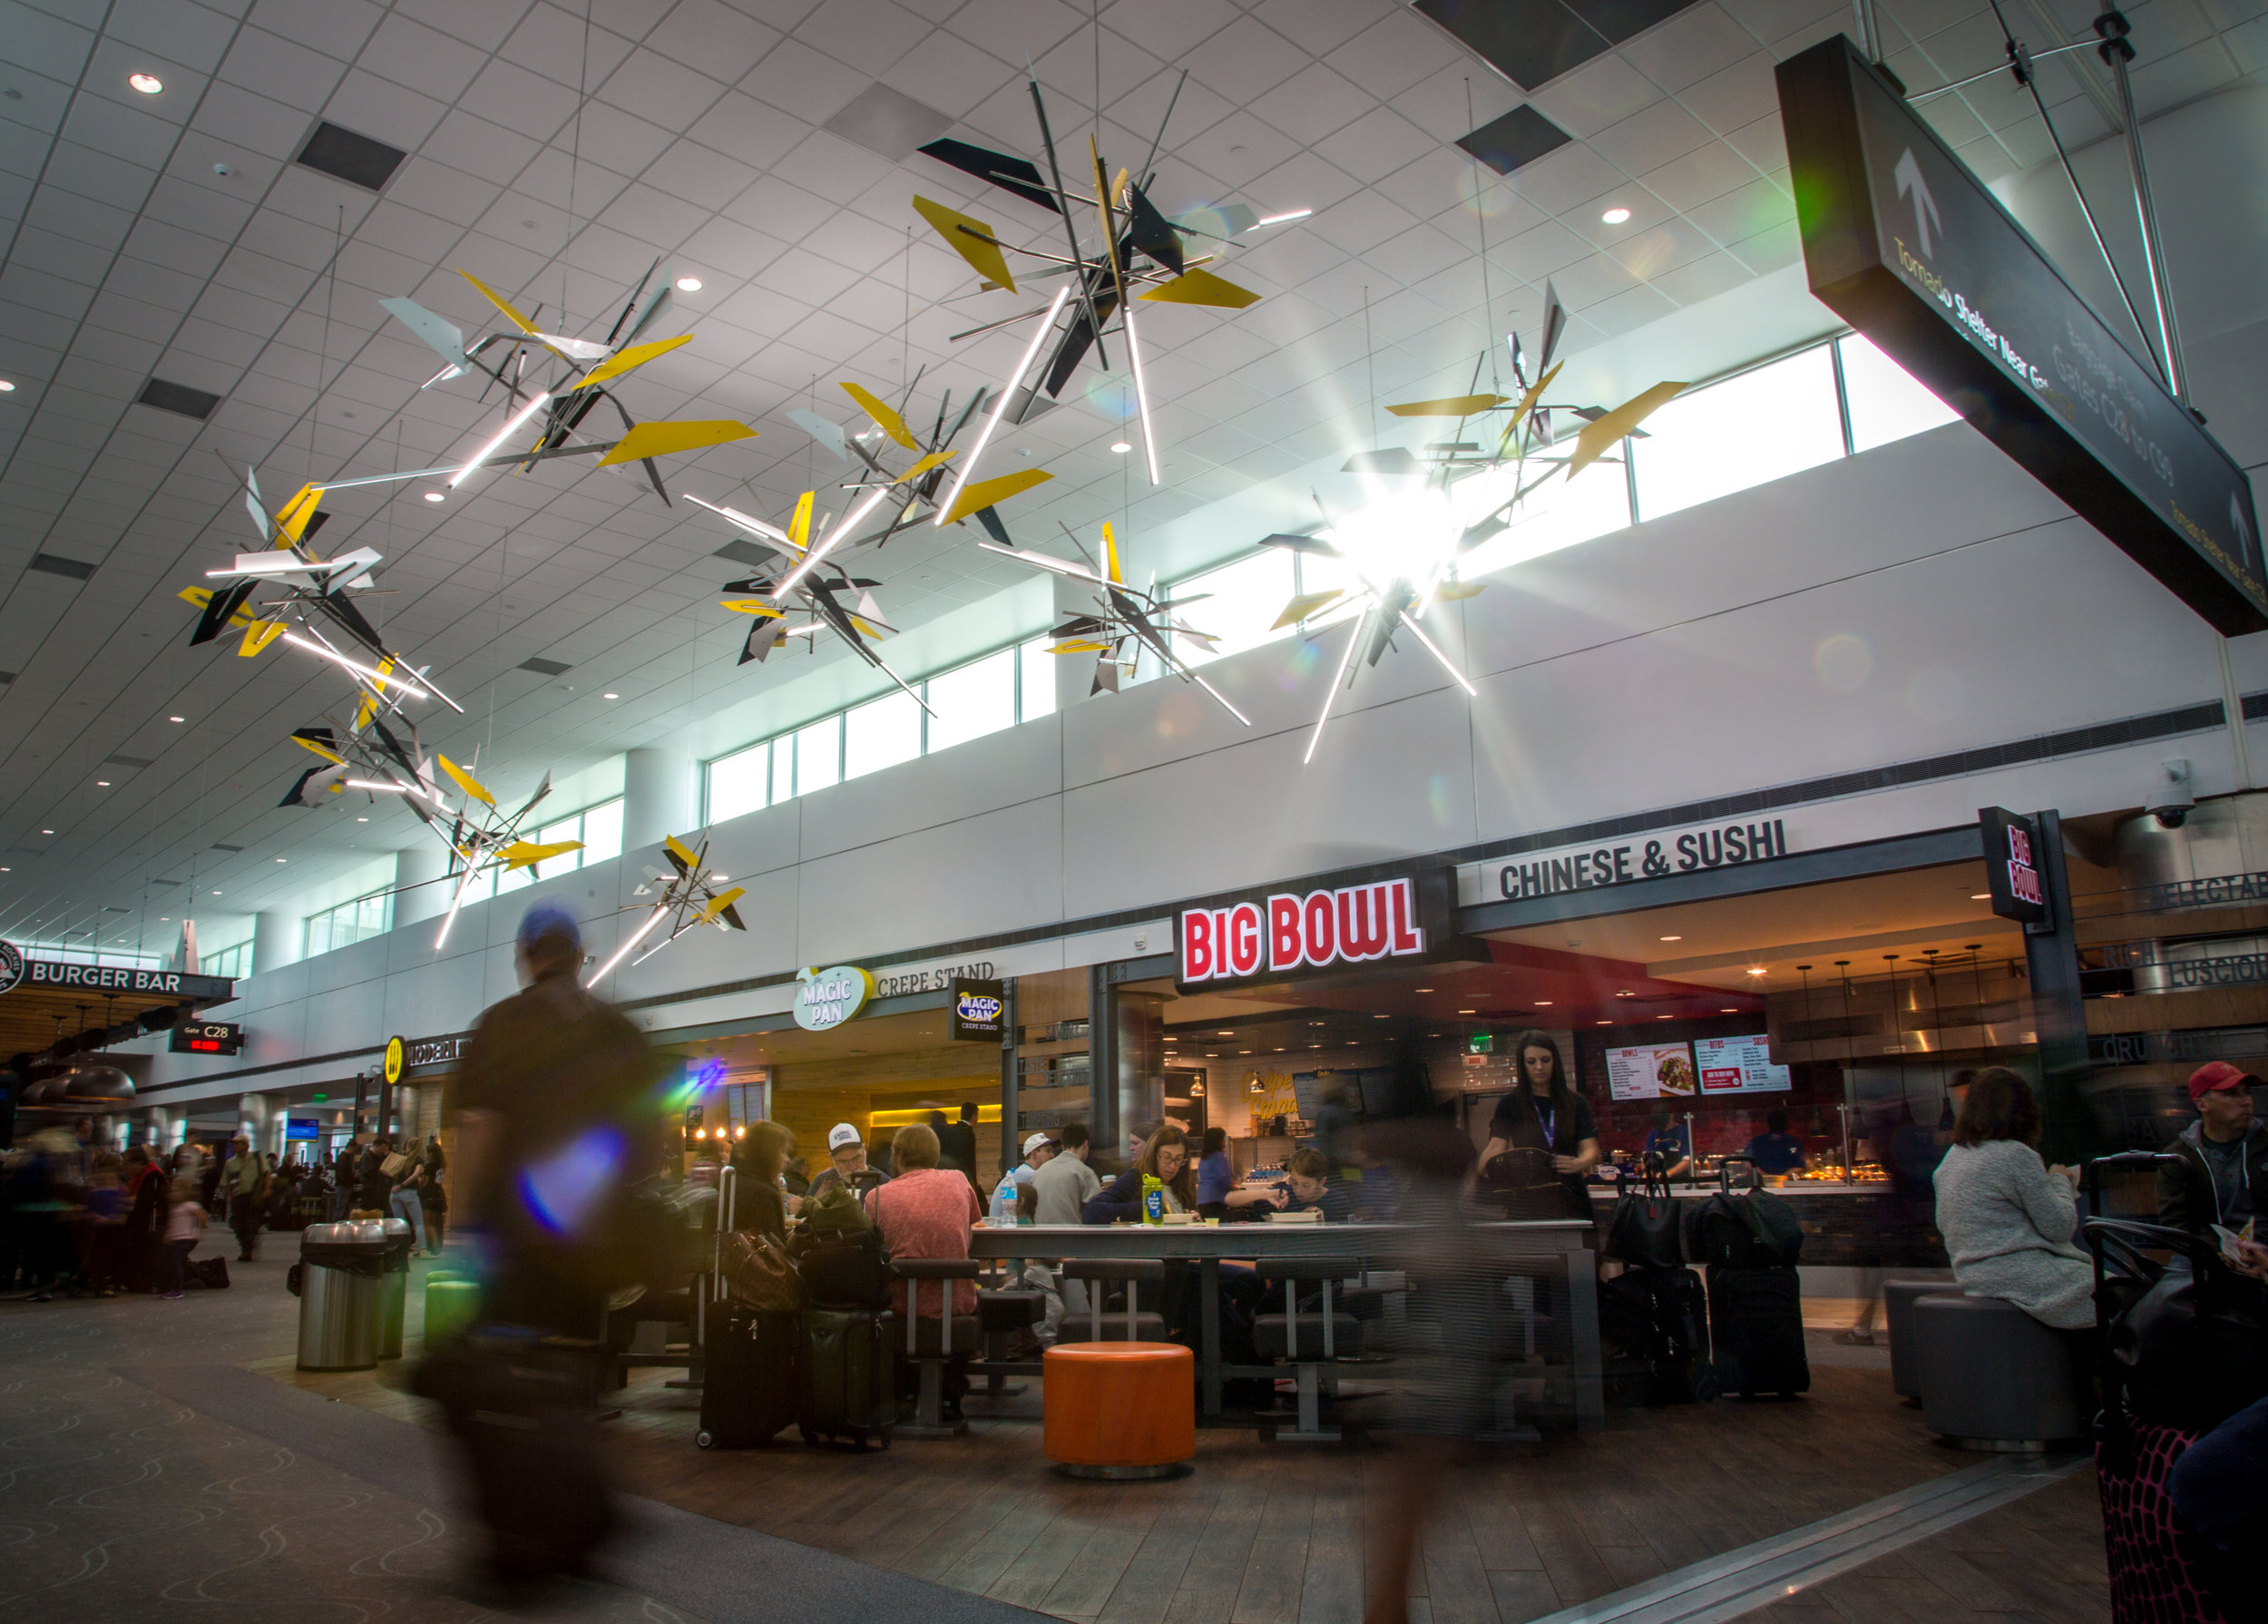   Photograph provided courtesy of Denver International Airport  